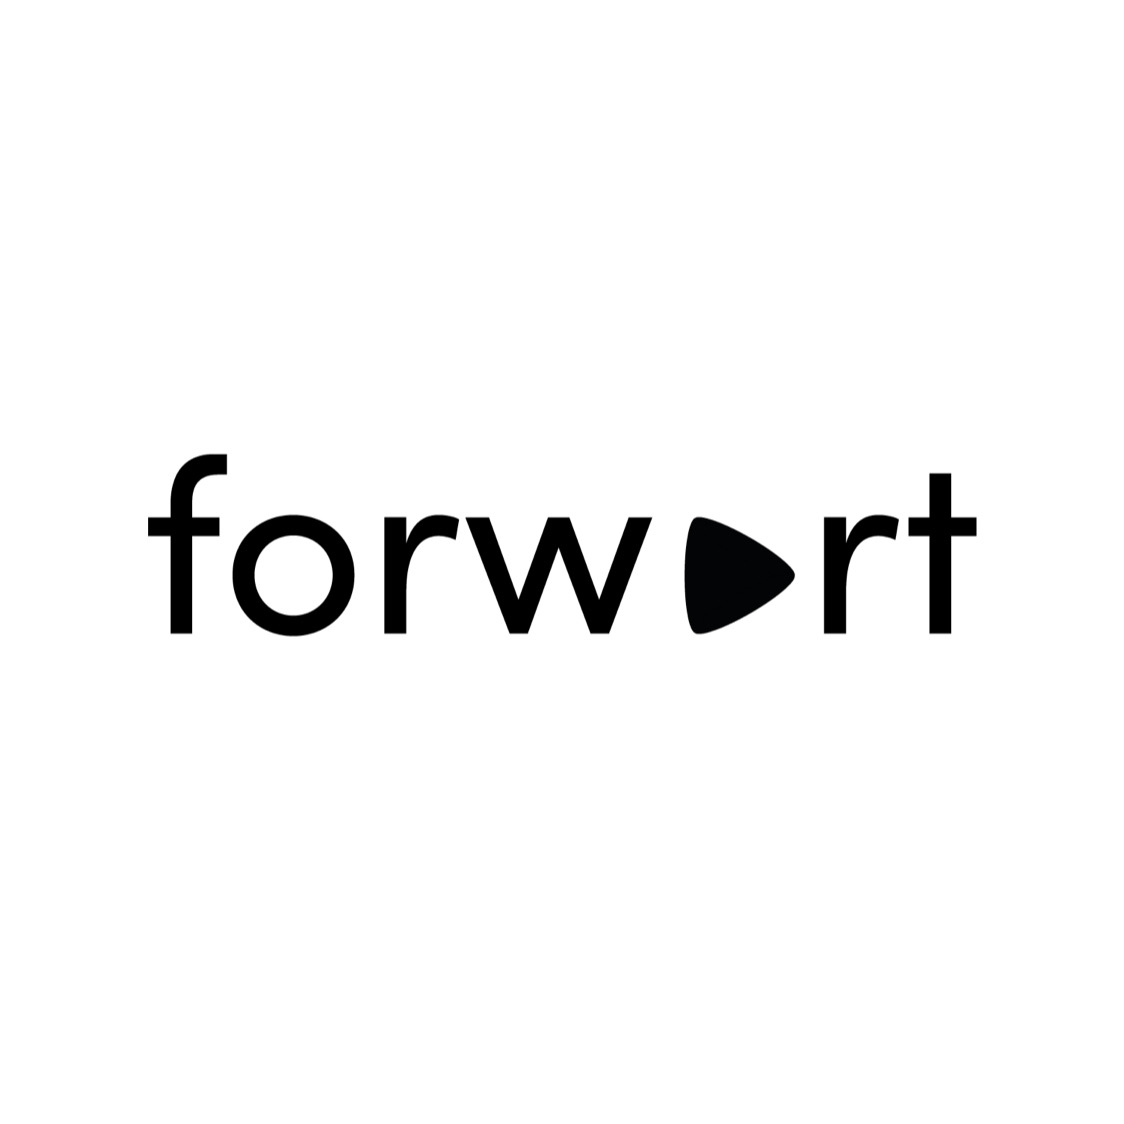 Forwart Gallery